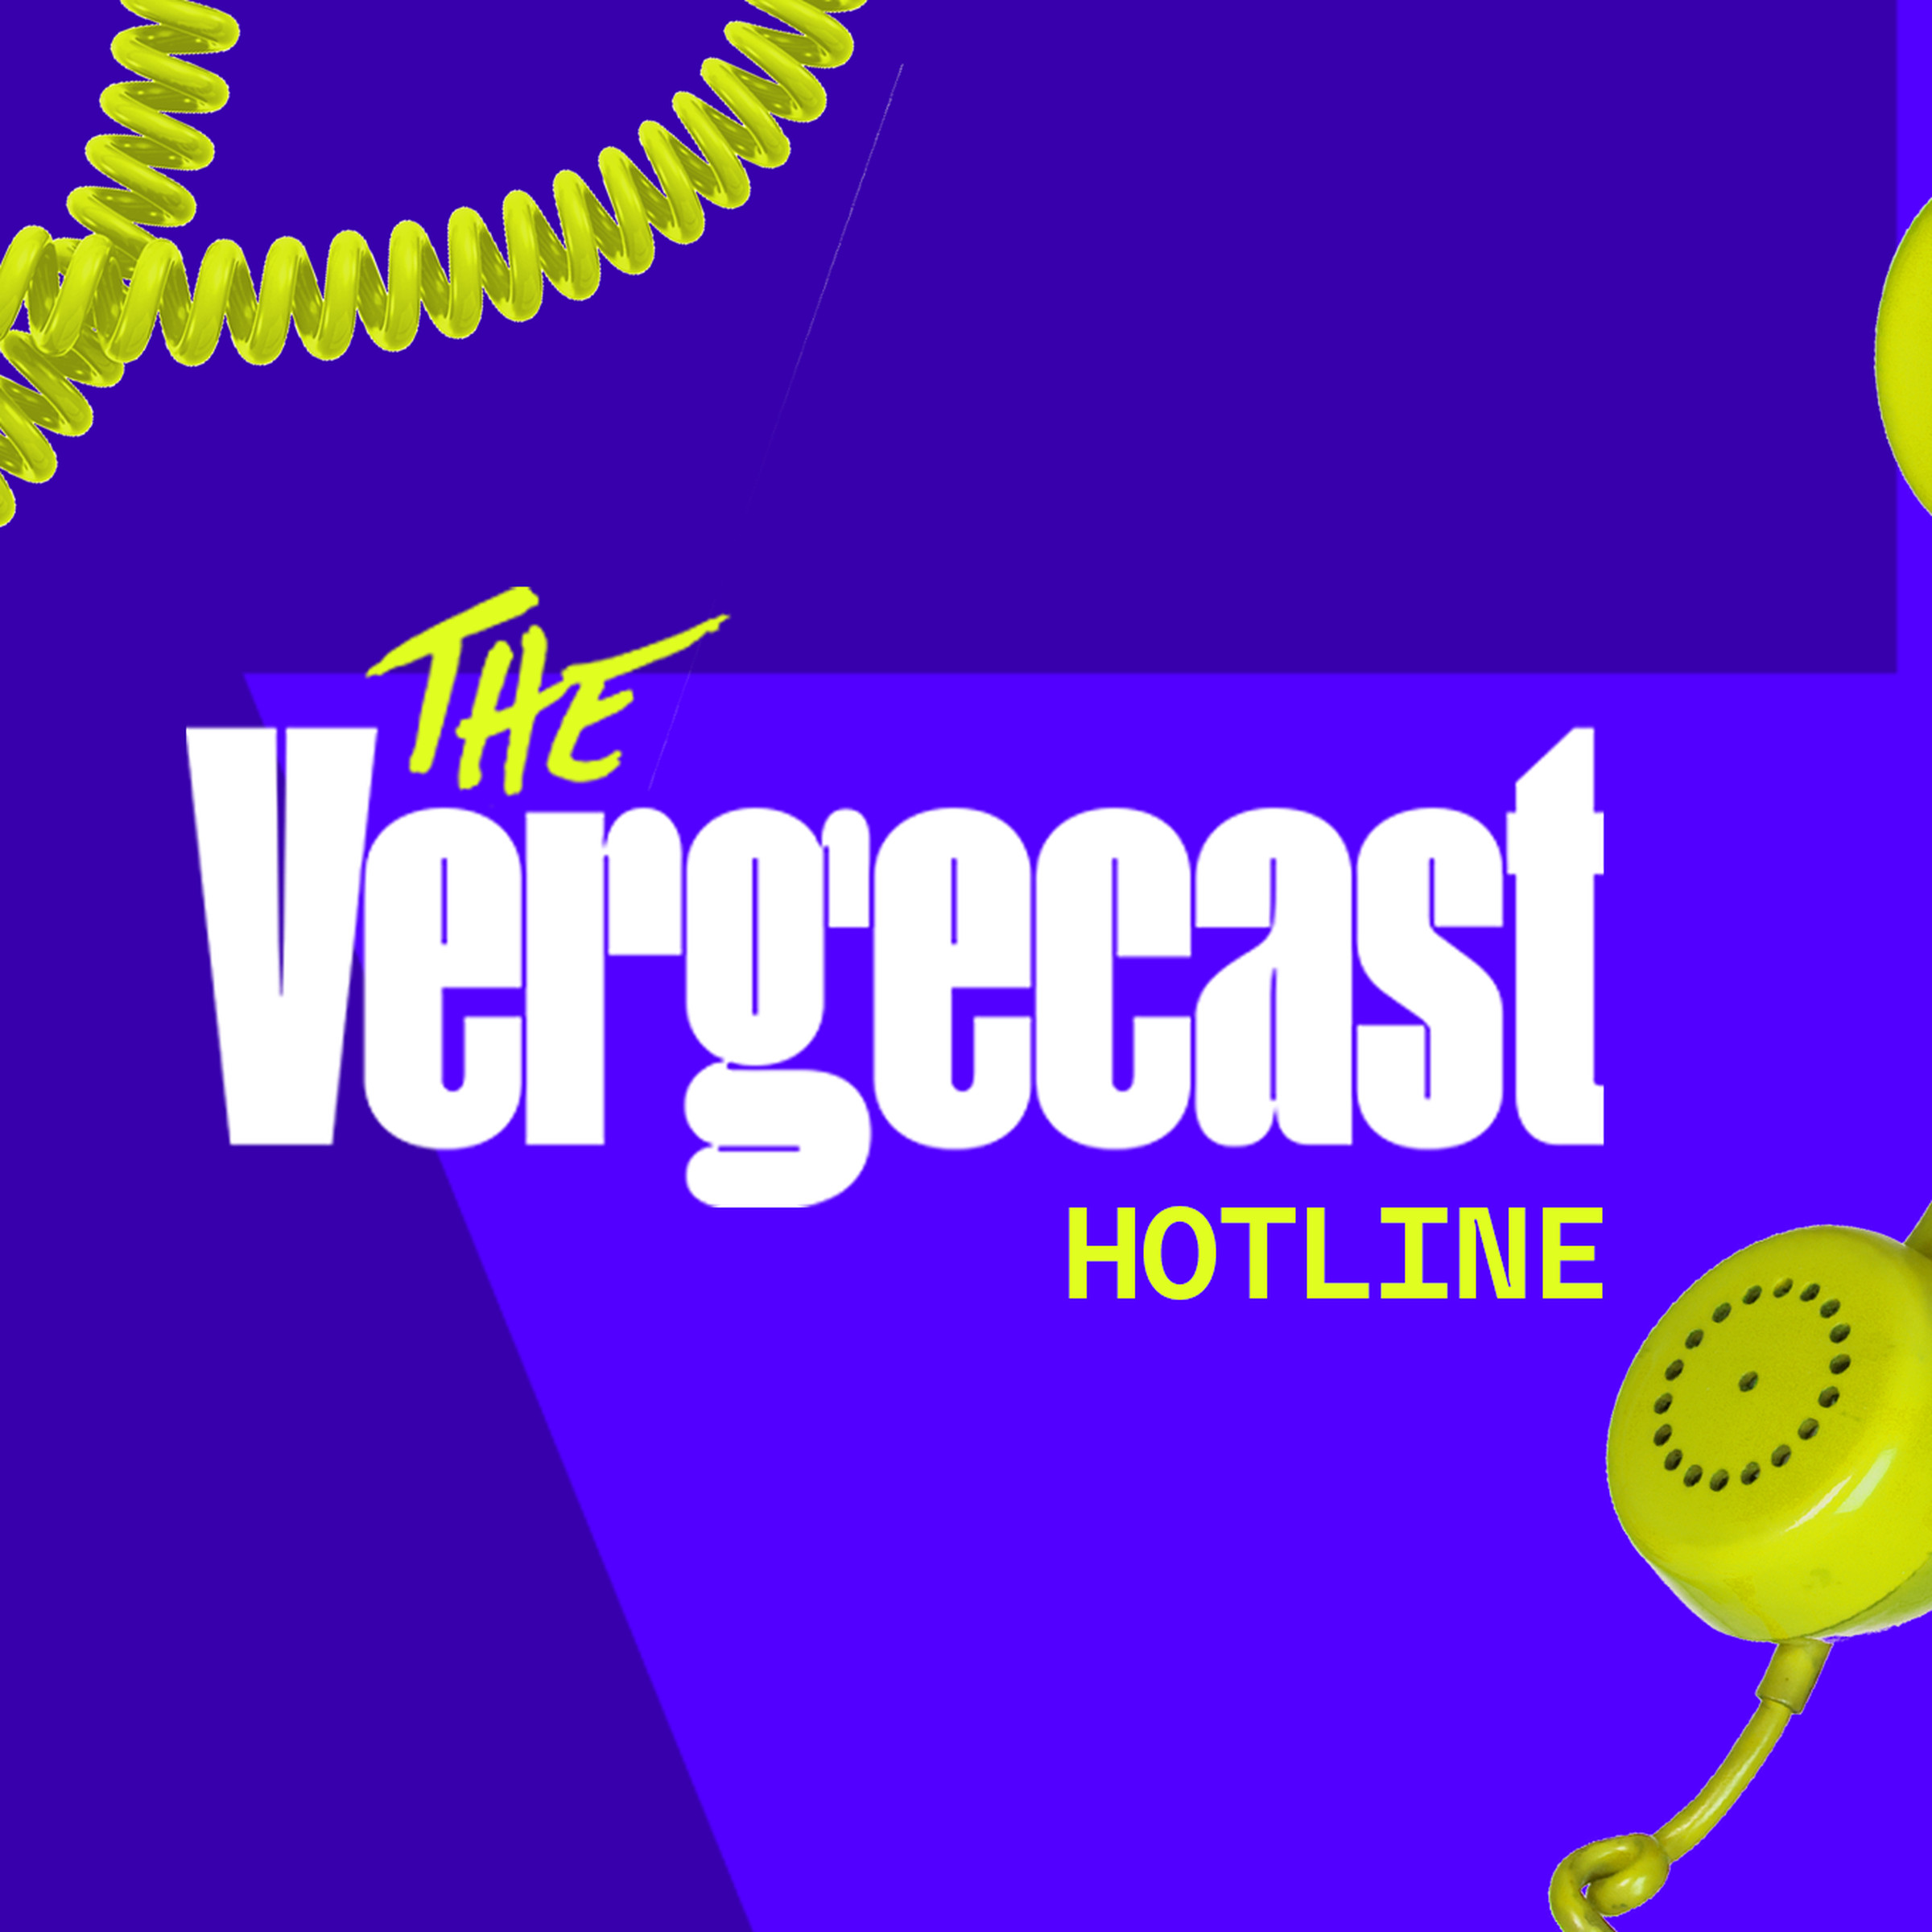 An illustration showing the Vergecast Hotline art.